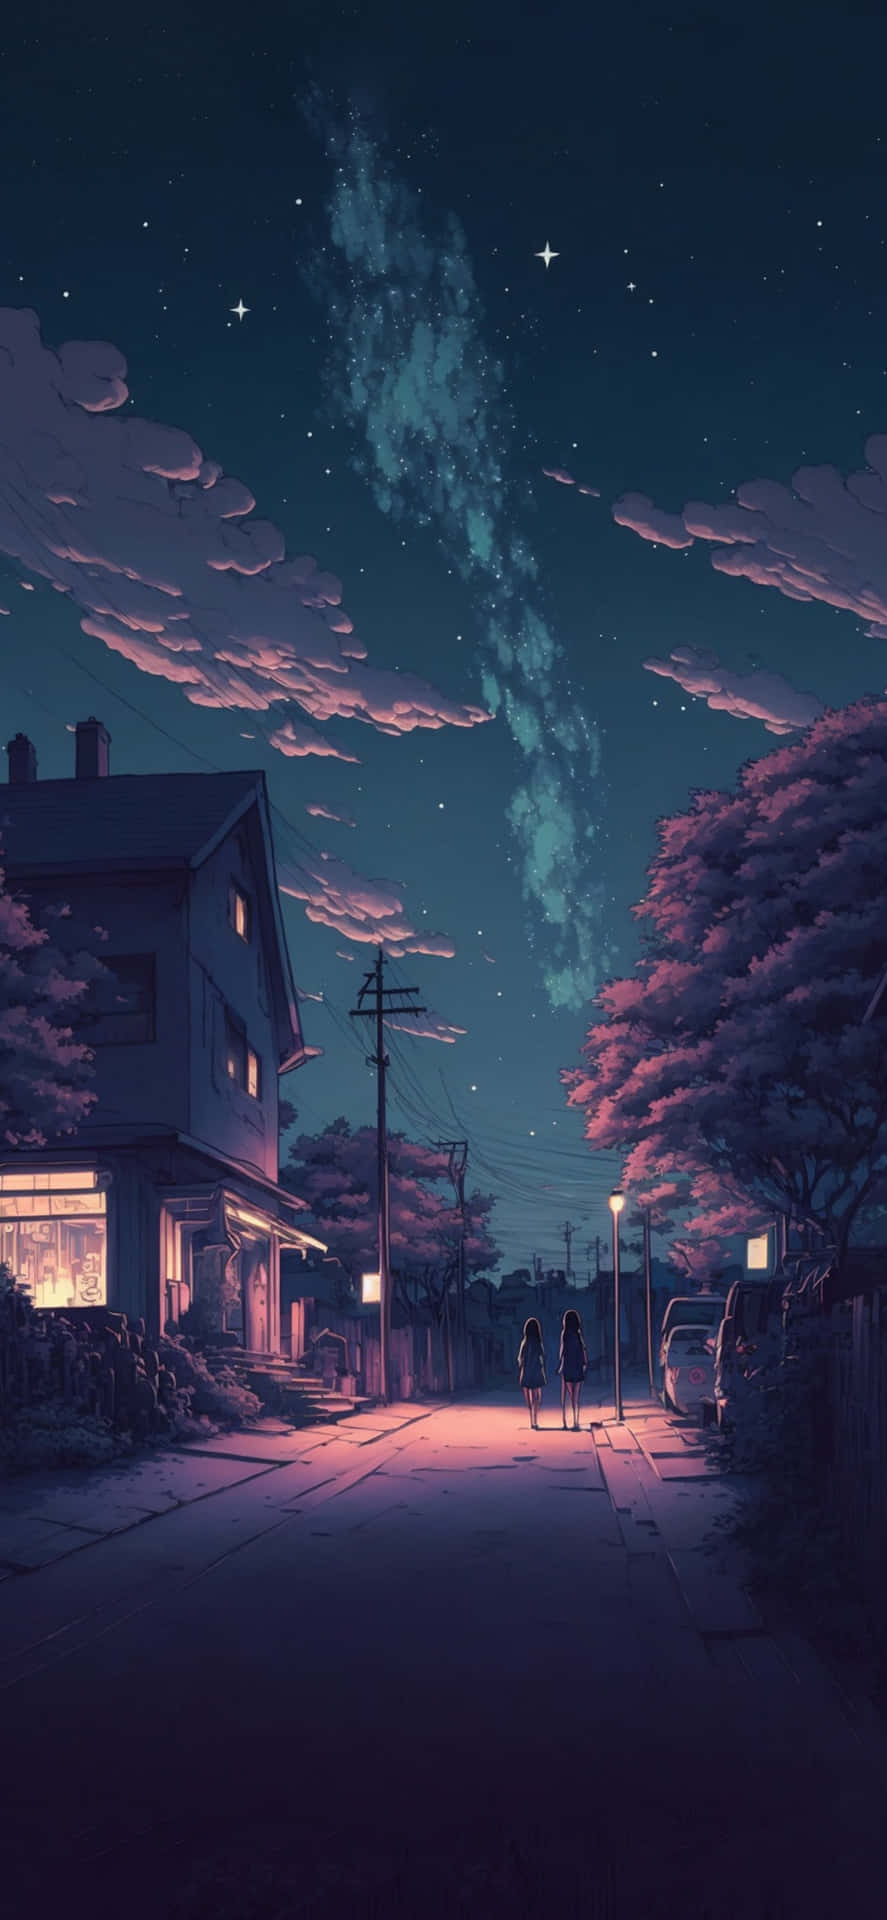 Download Sad Boy Anime Night City Lights Wallpaper | Wallpapers.com